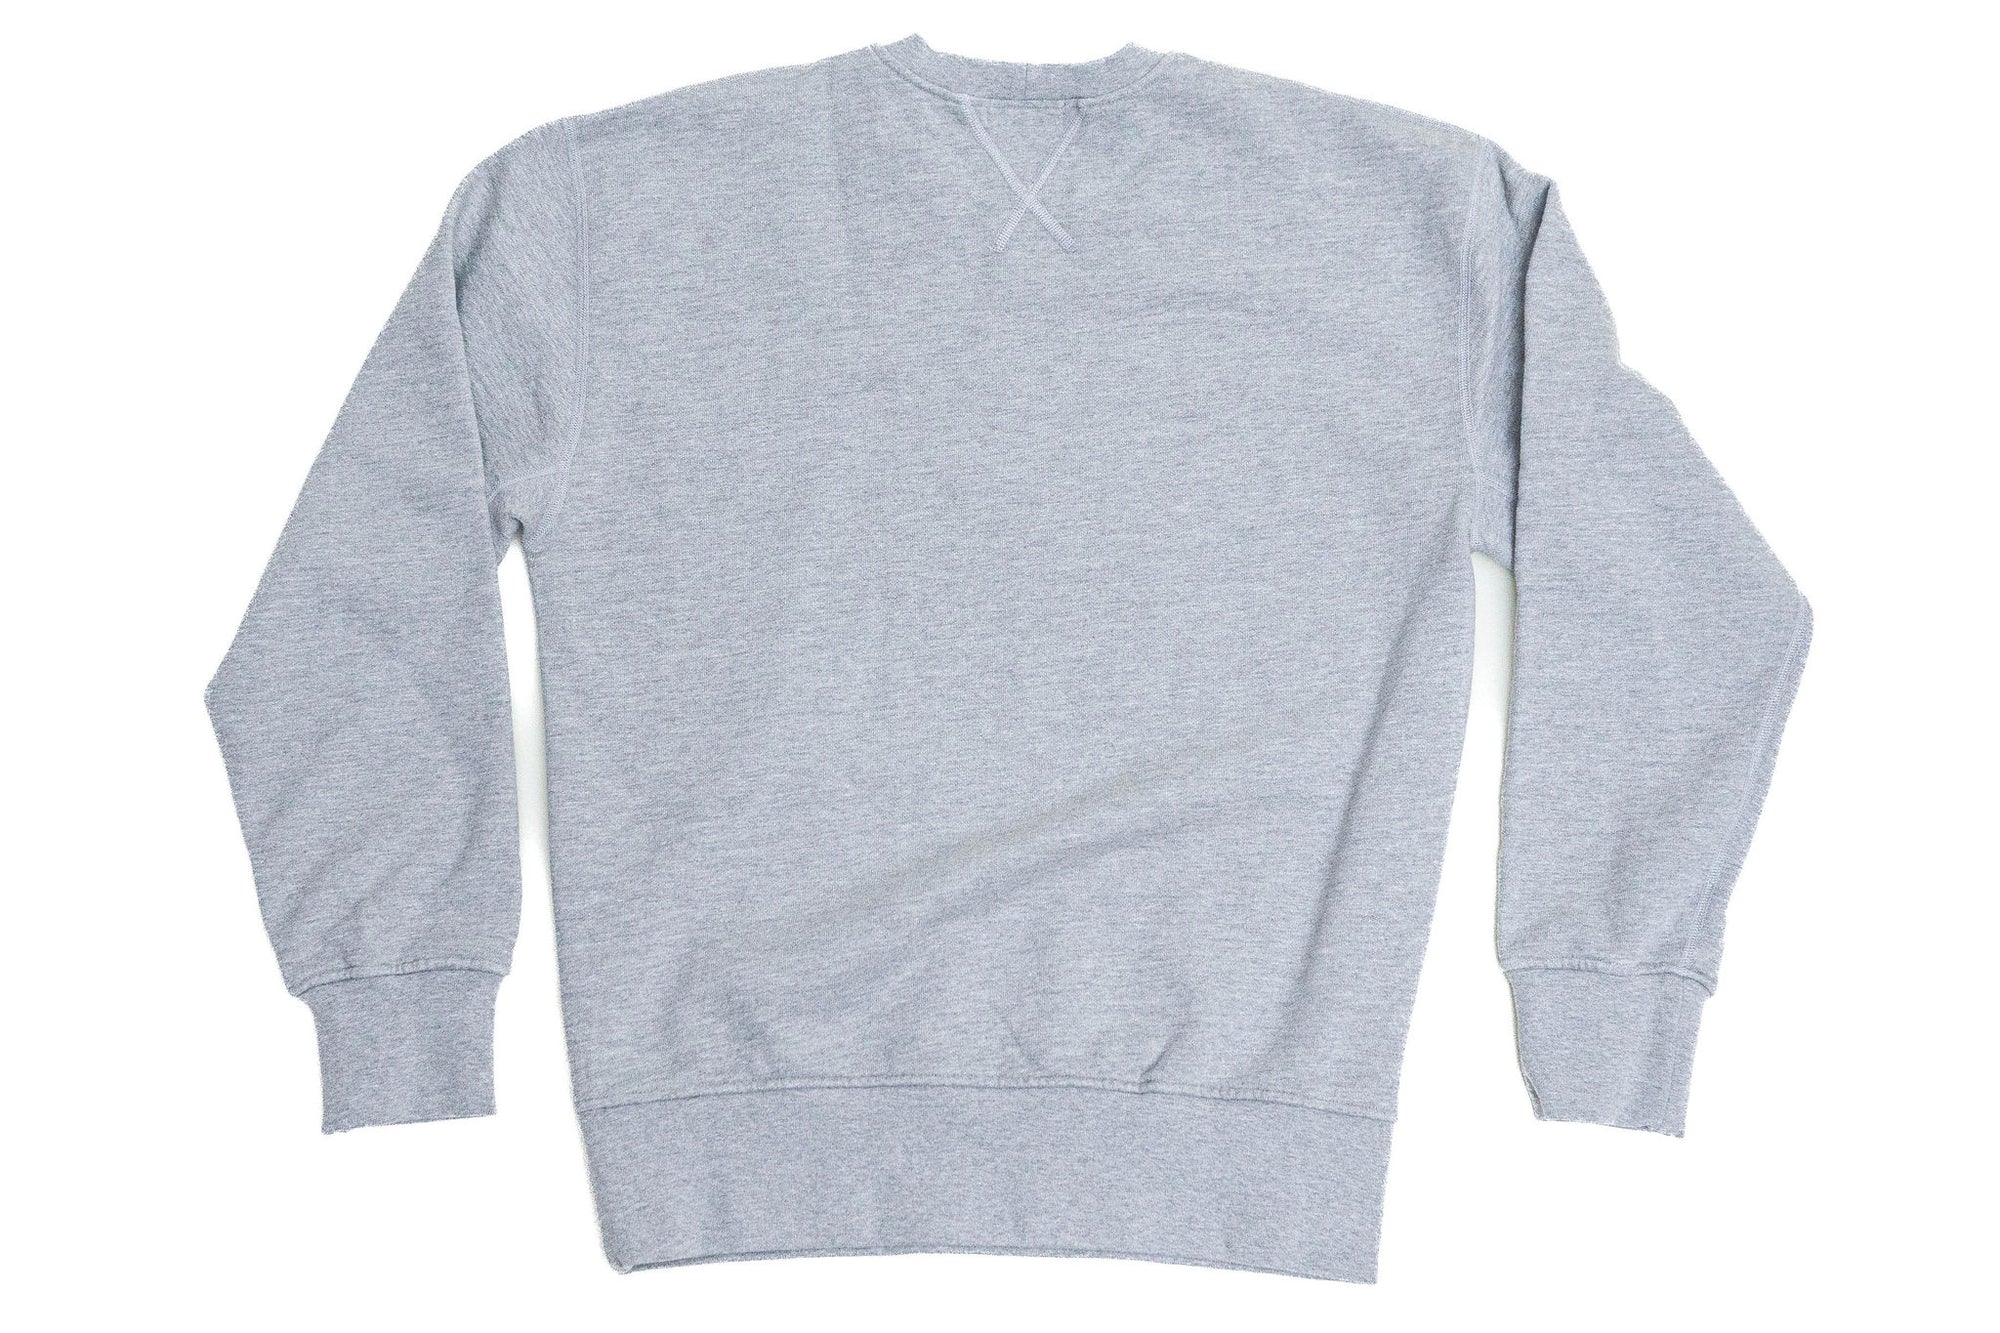 Freenote Cloth Deck Sweatshirt - Heather Grey